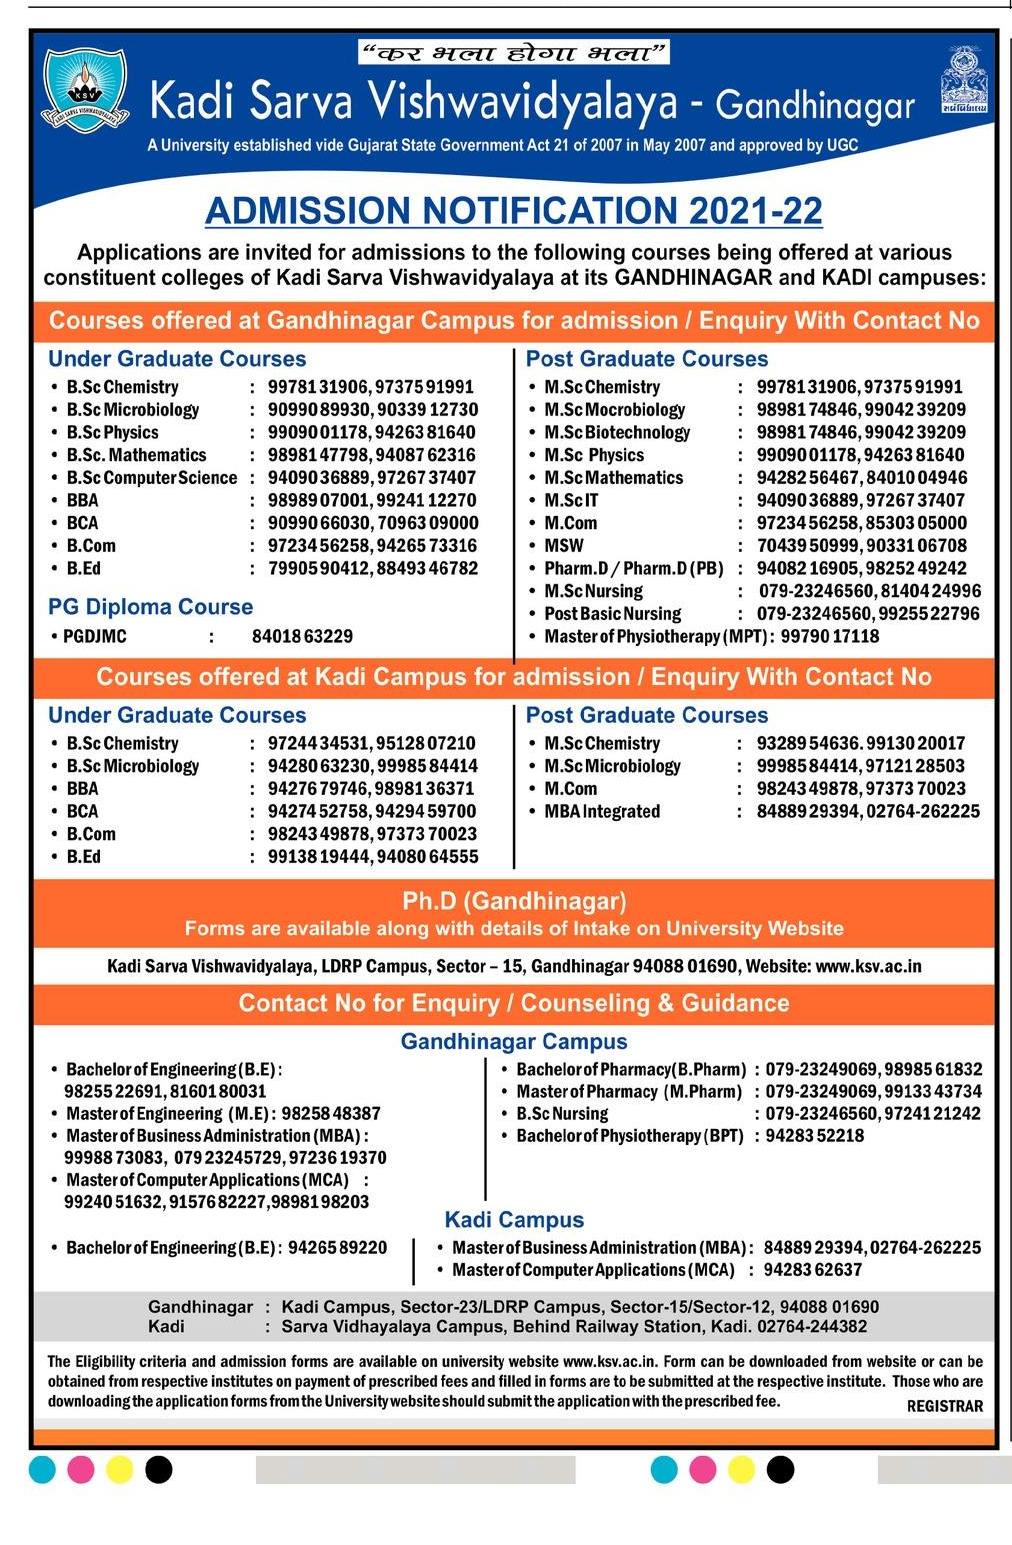 kadi-sarva-vishwavidyalaya-gandhinagar-admission-notification-2021-22-ad-gujarat-samachar-ahmedabad-23-06-2021